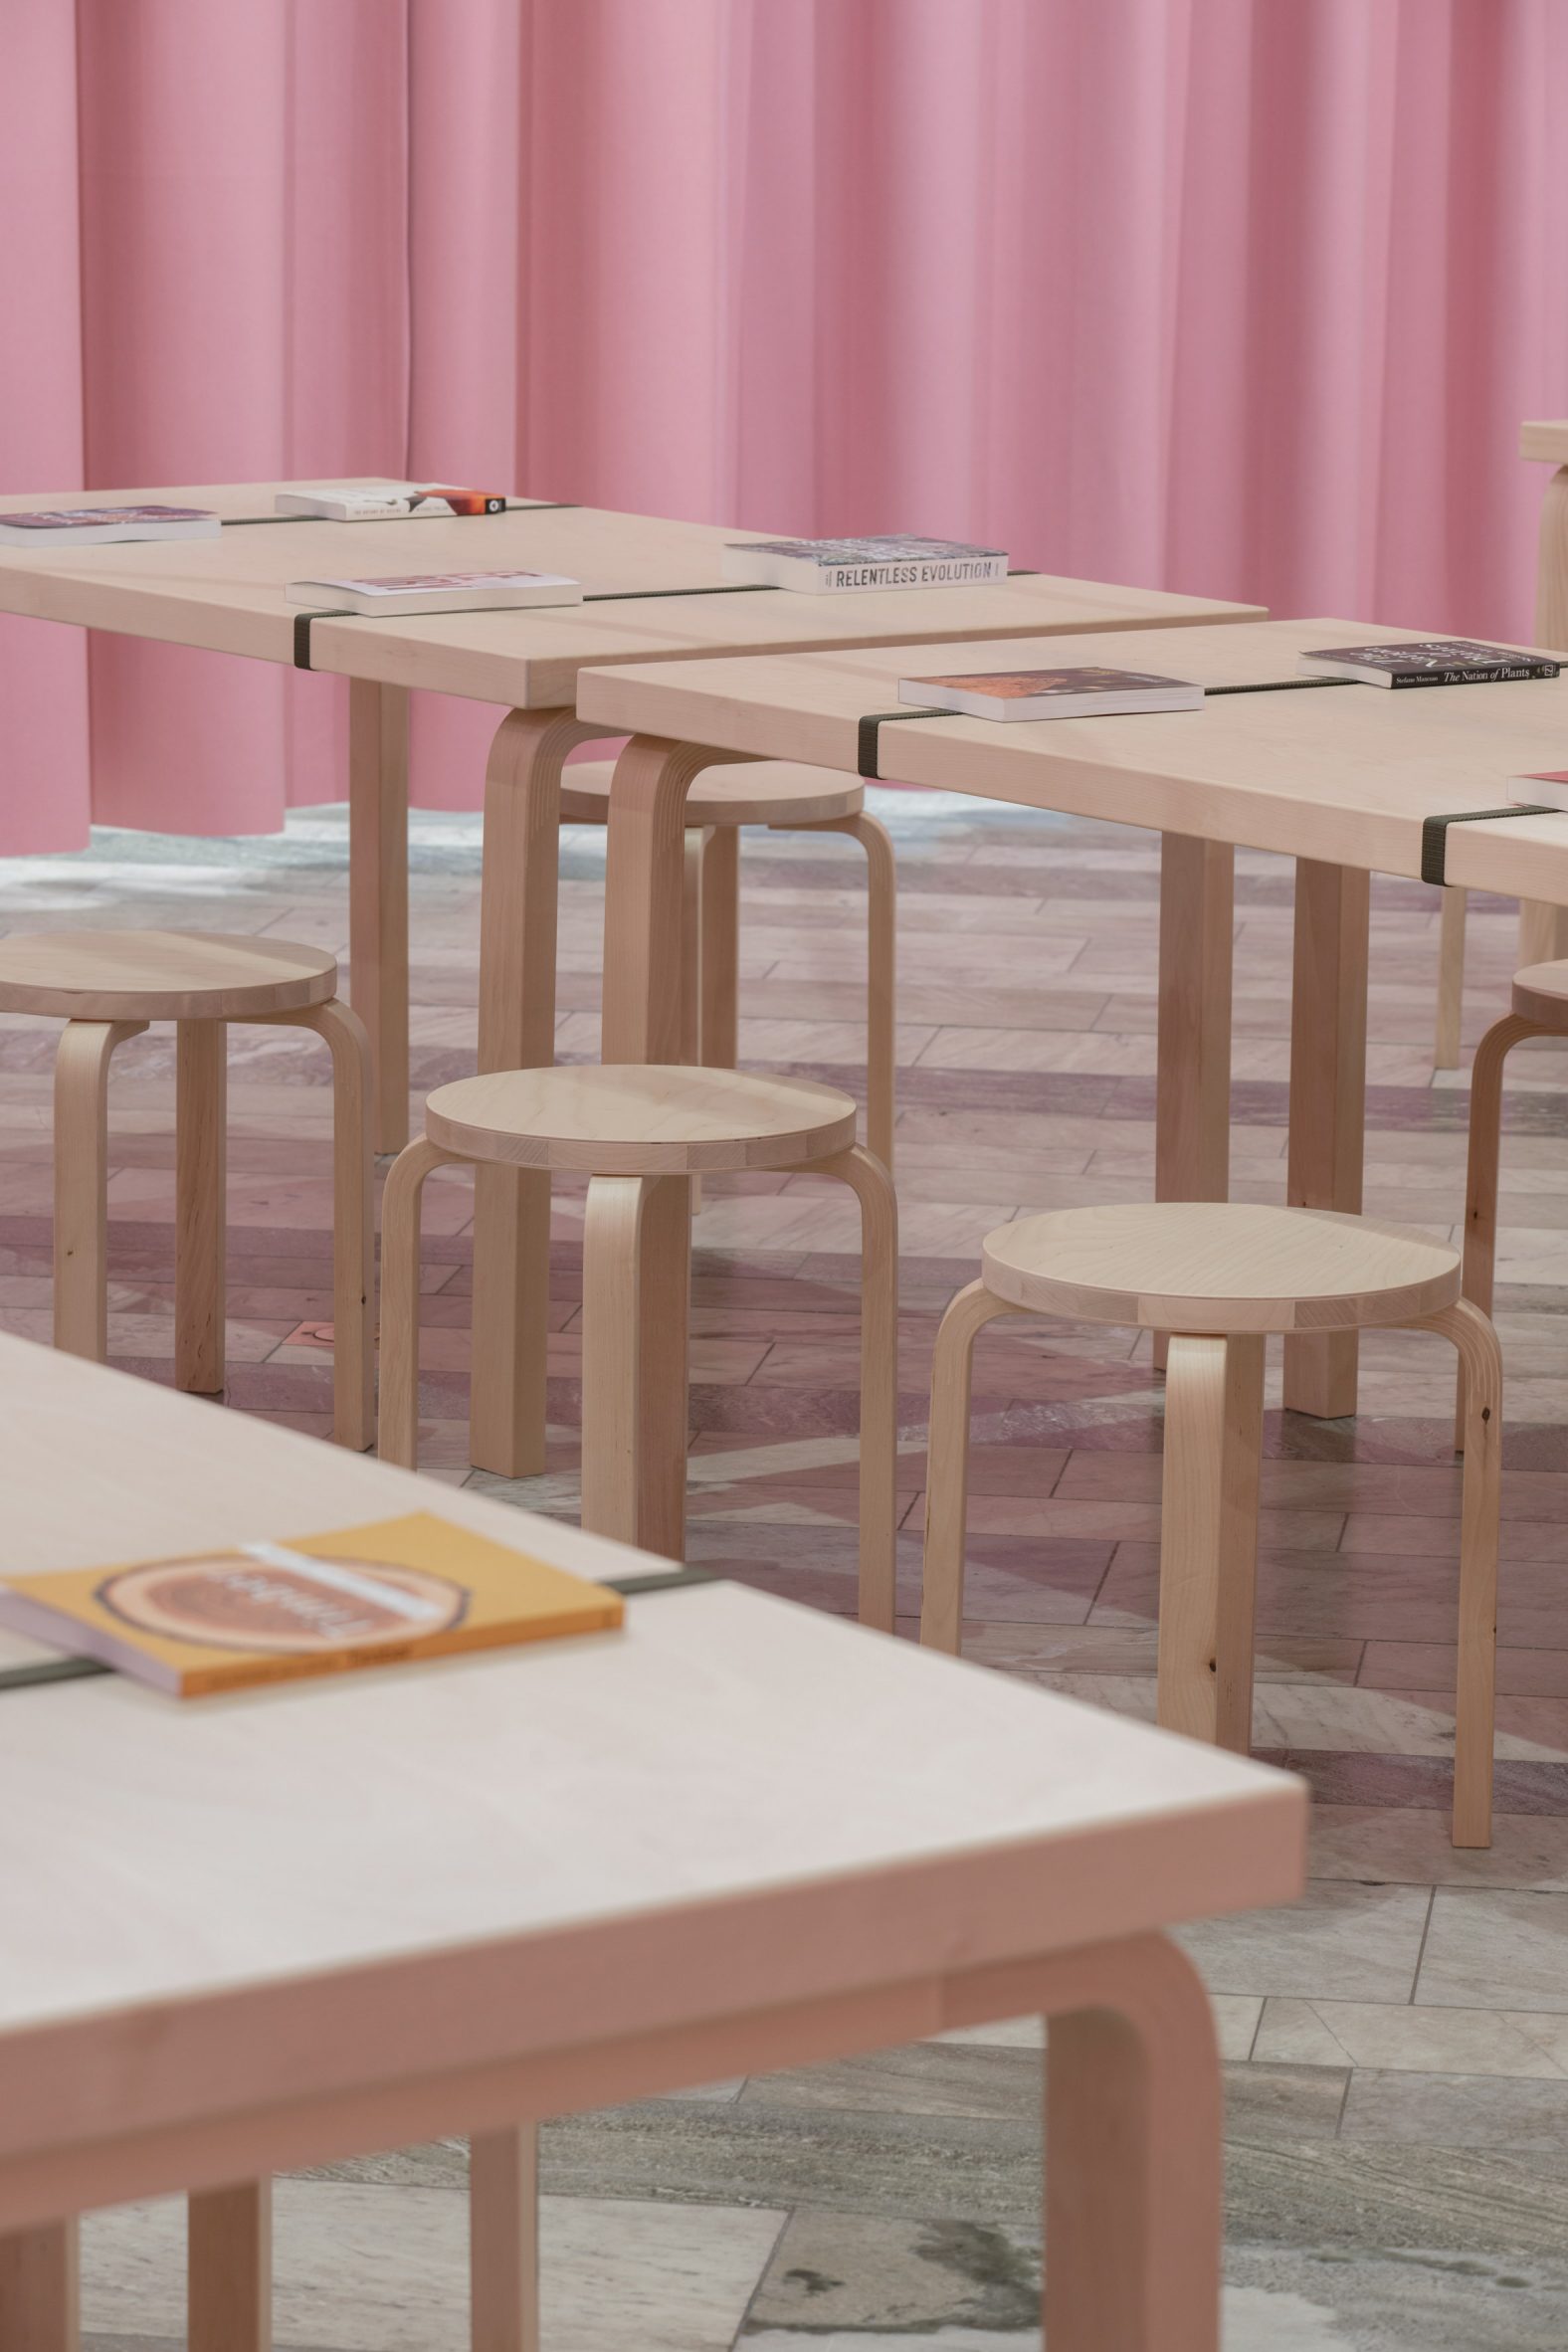 Timber furniture by Artek